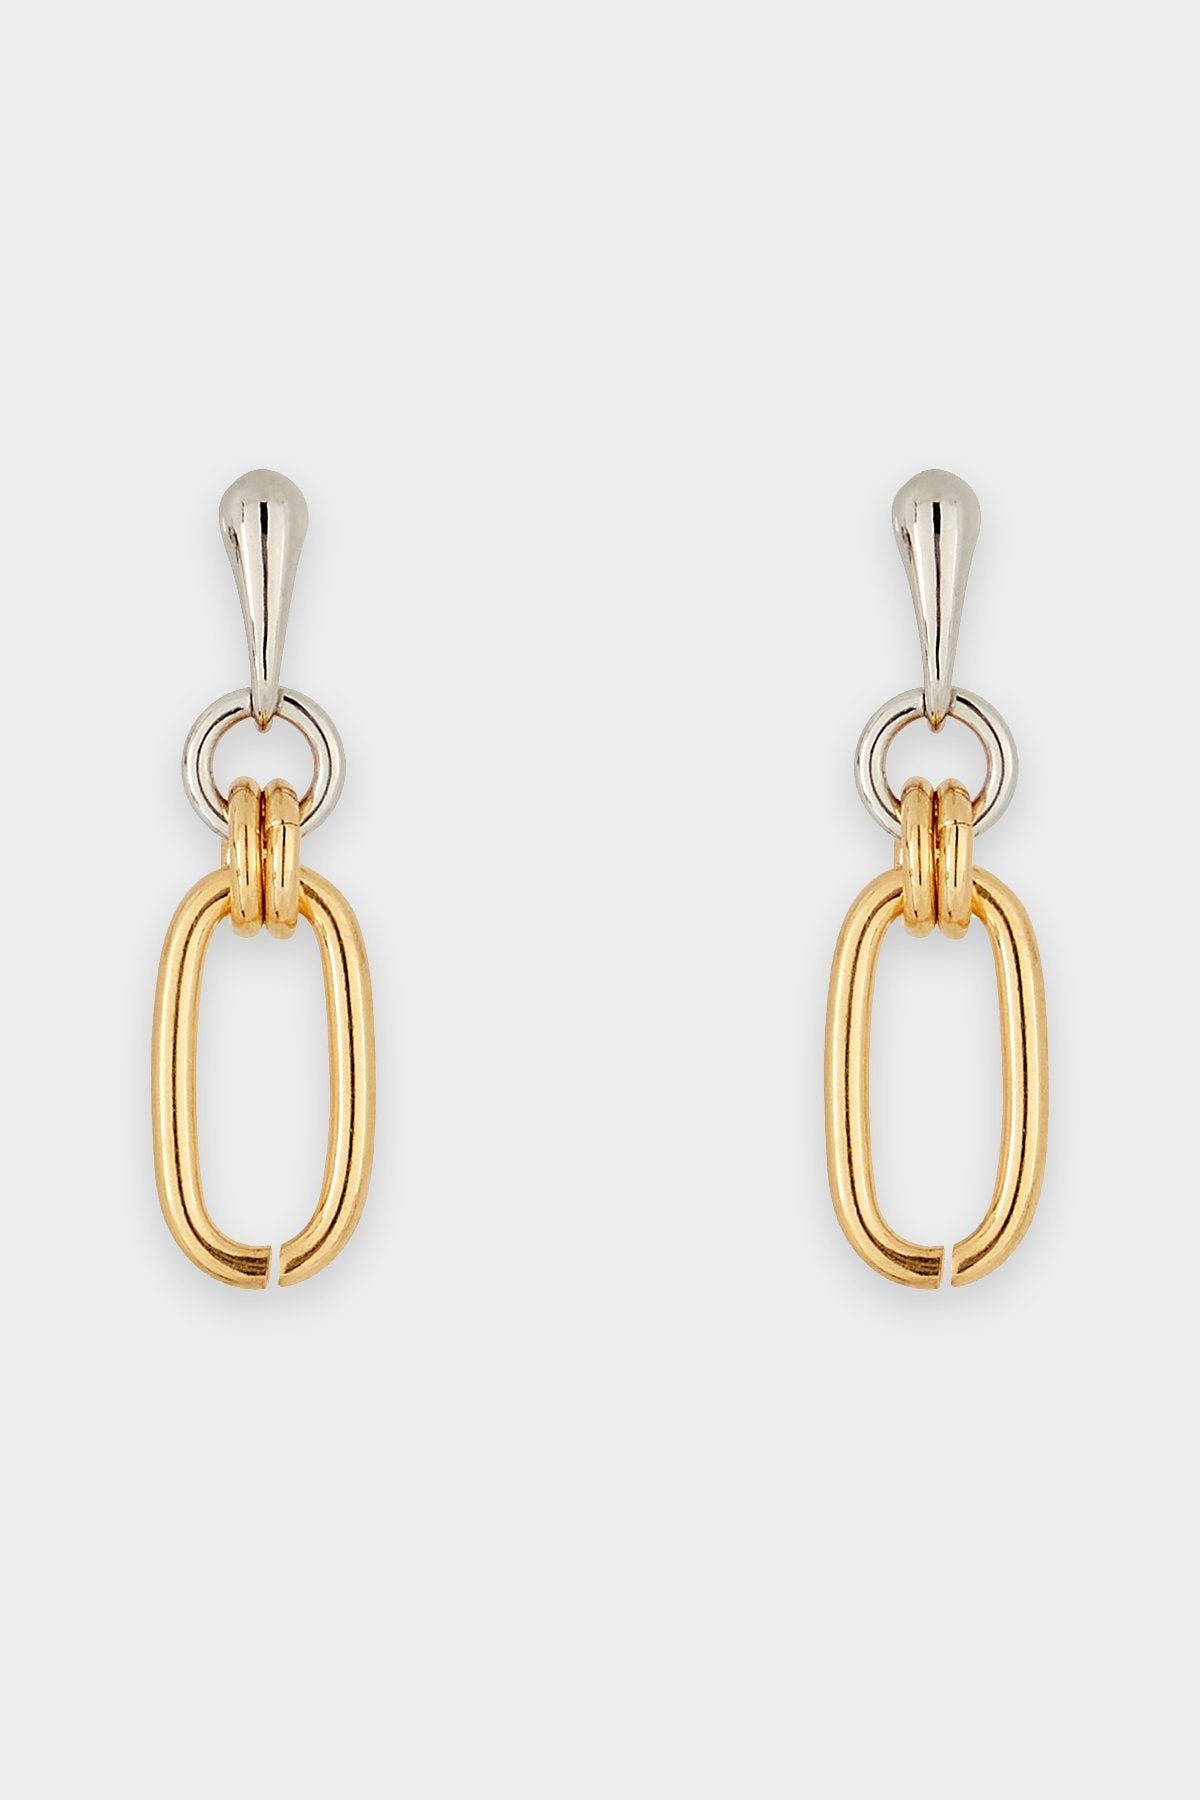 Duplex Earrings in Gold - shop-olivia.com